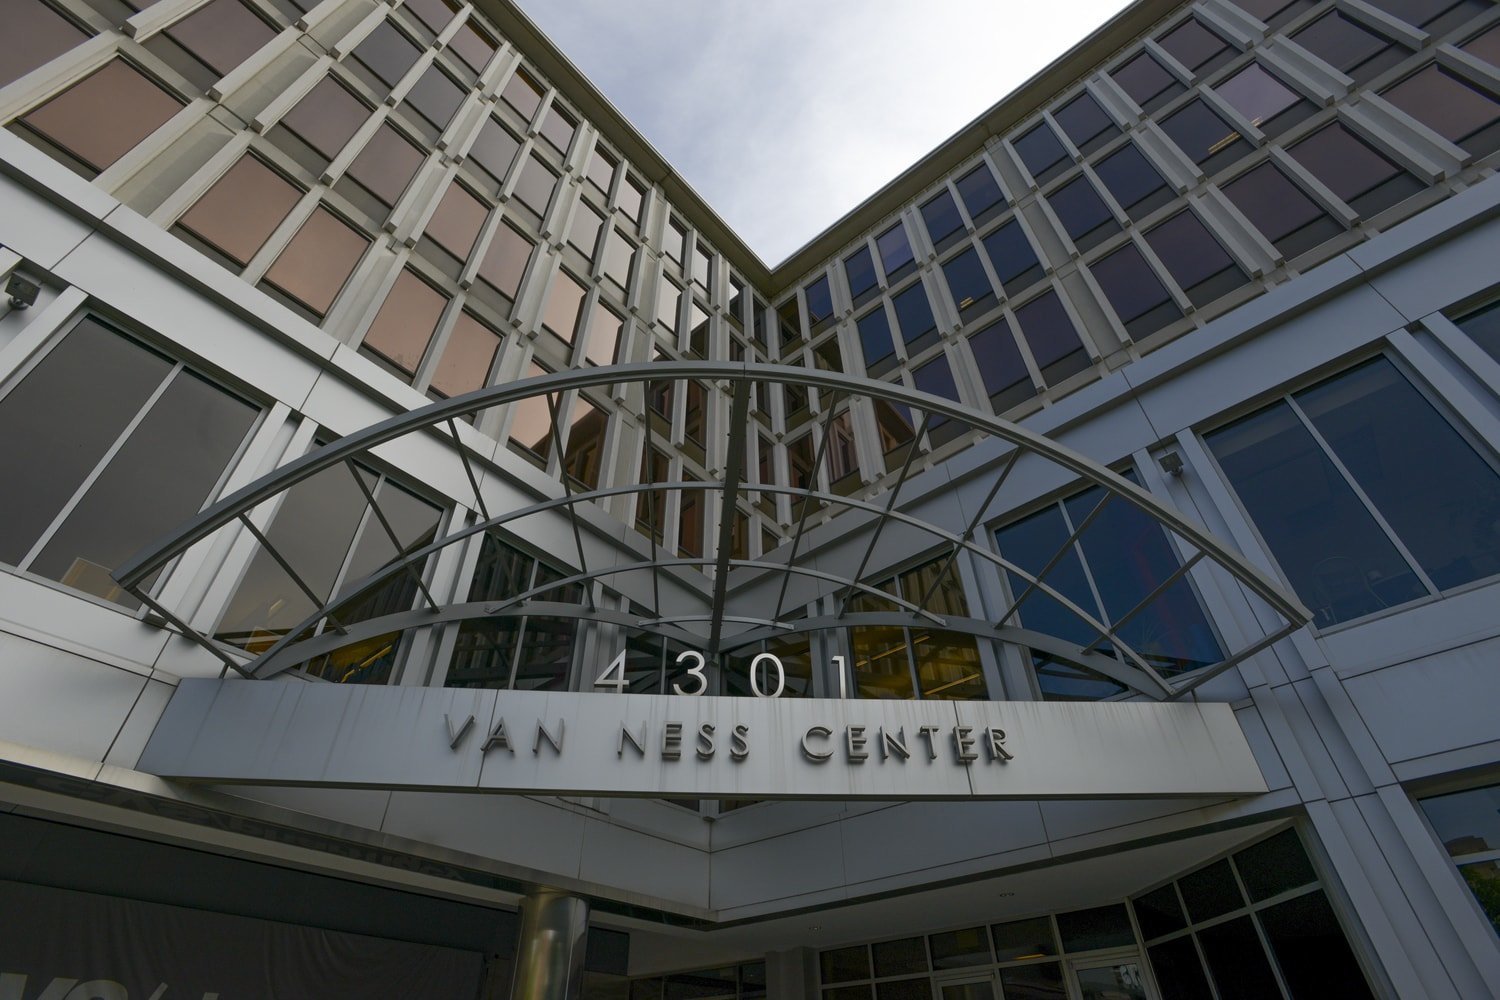 Van Ness Center - Washington, DC